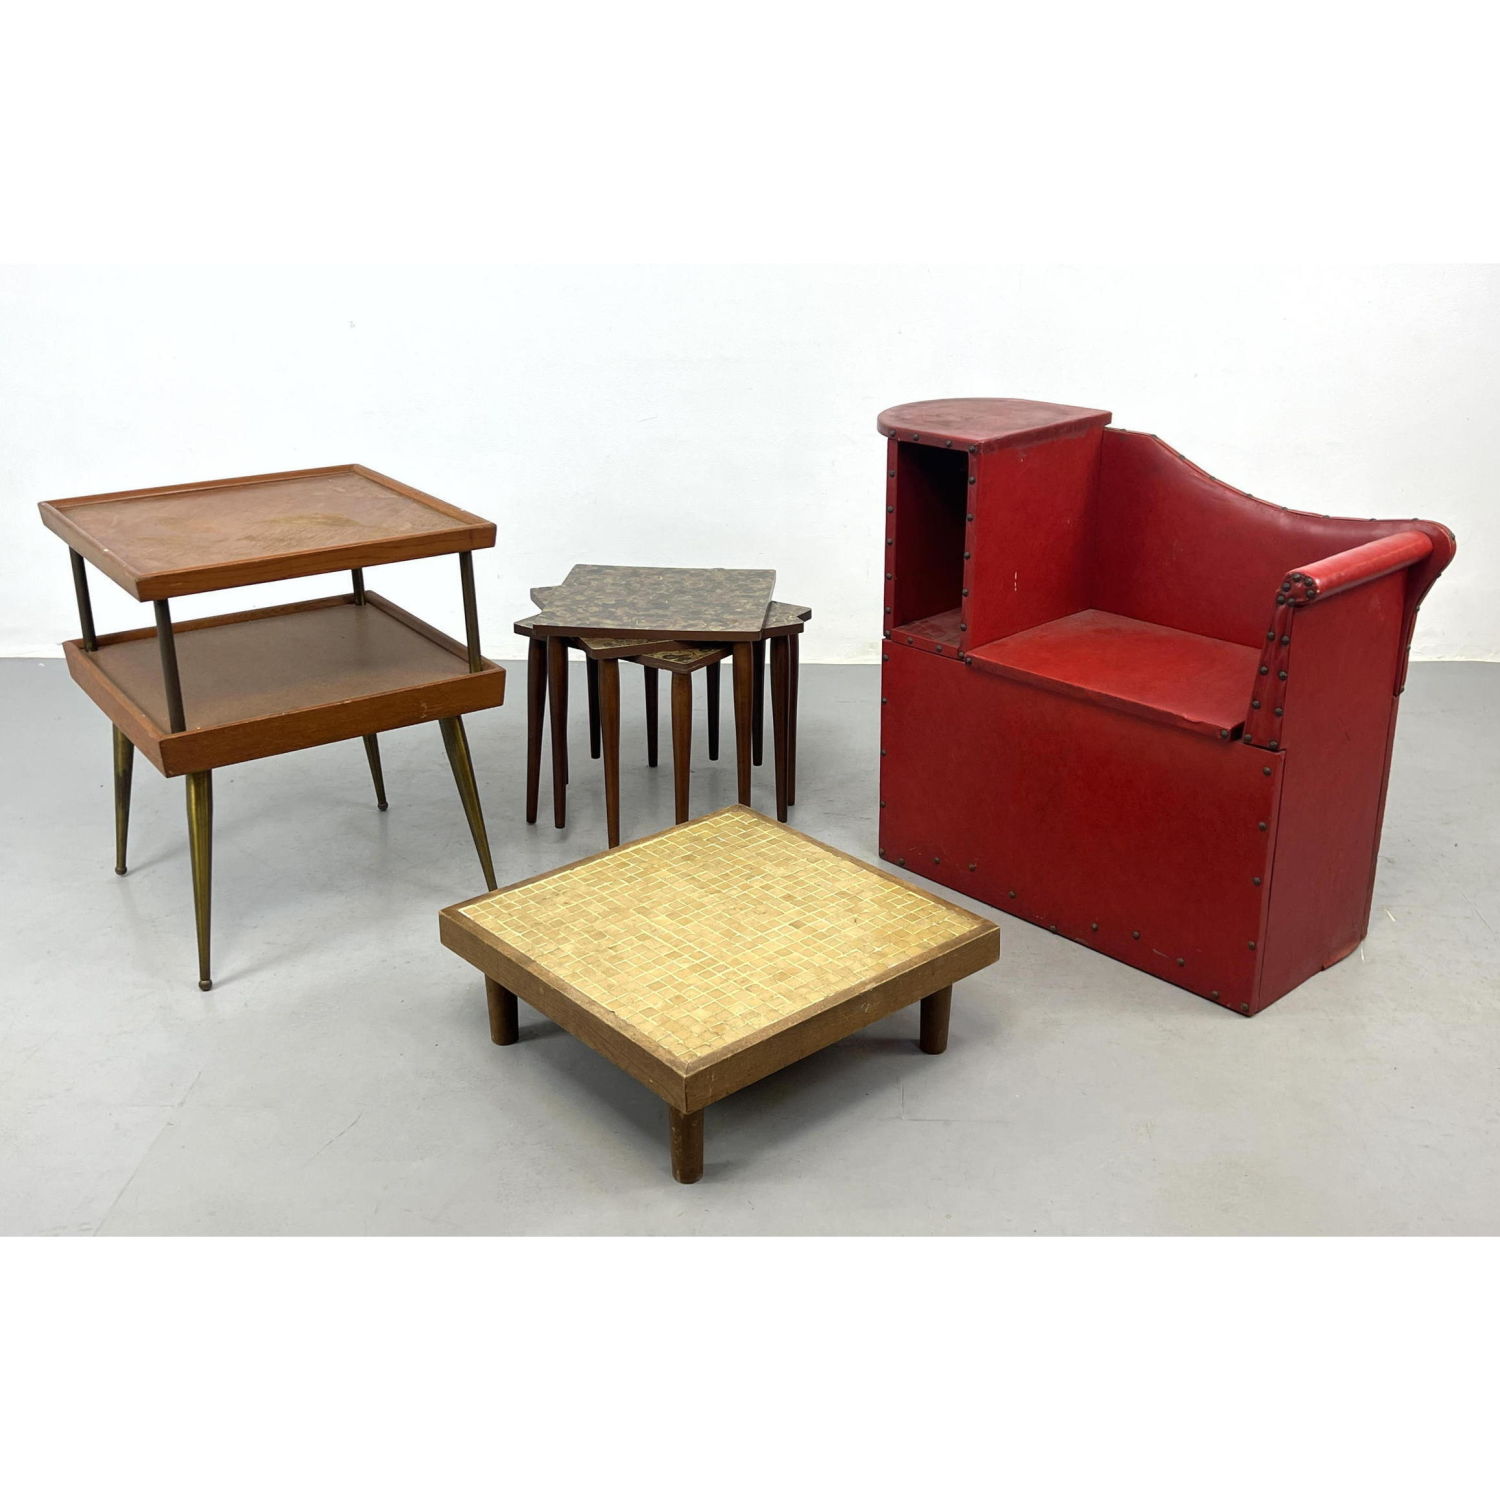 Mixed Modernist Furniture Lot.